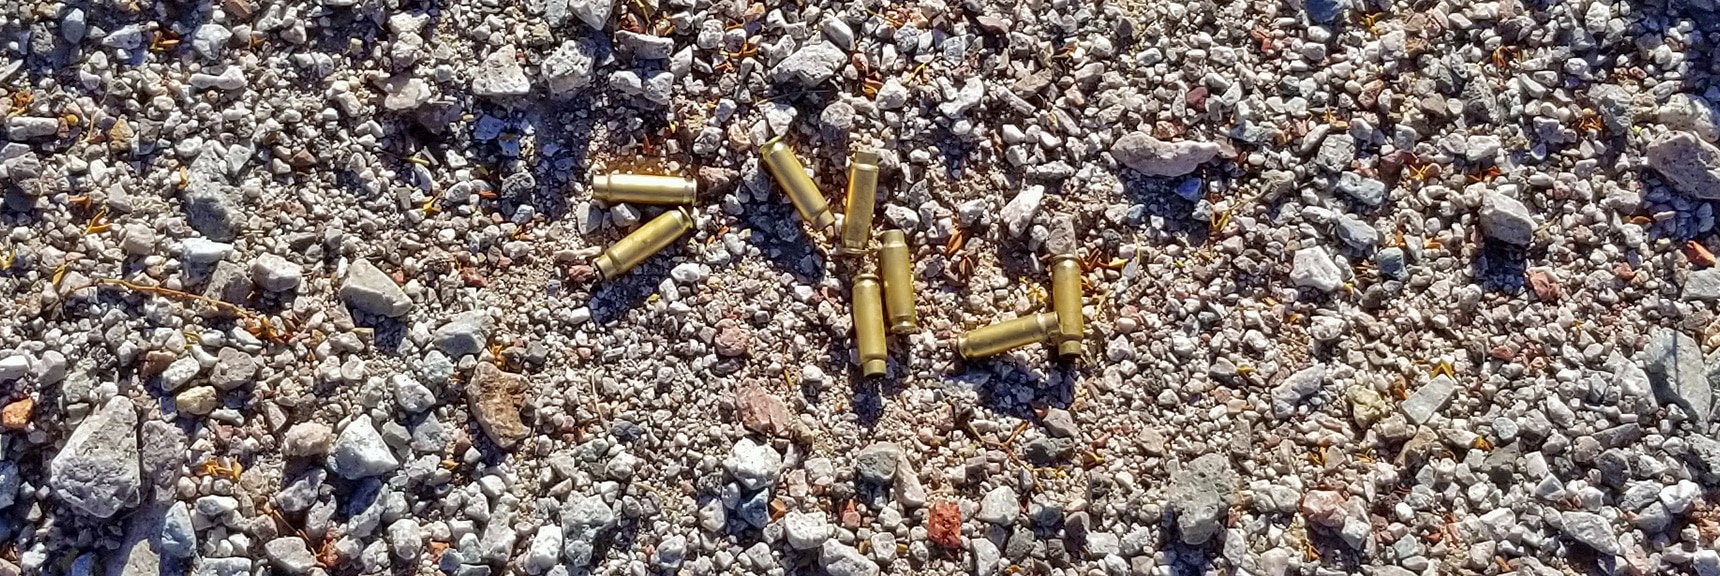 Spent Bullet Casings at Base of 